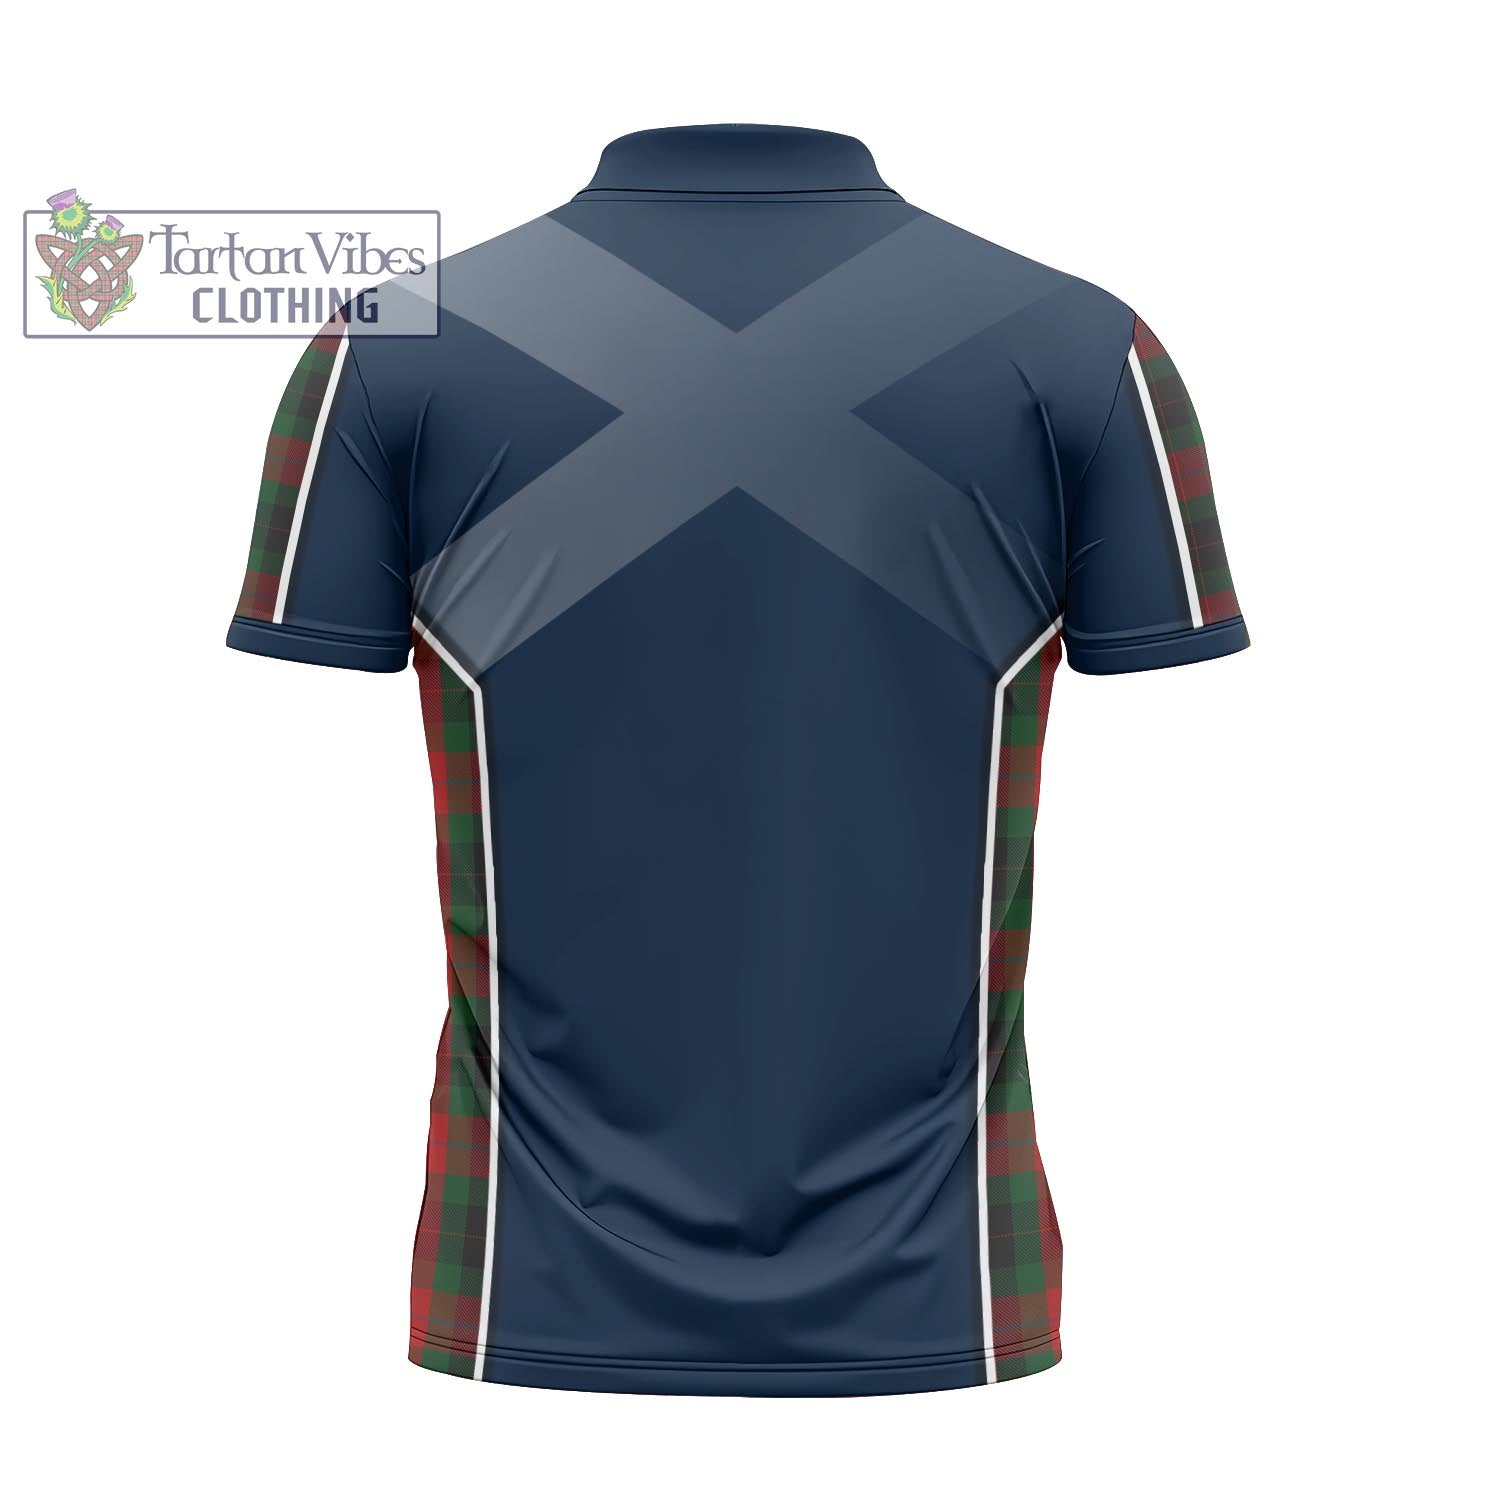 Tartan Vibes Clothing Skene of Cromar Black Tartan Zipper Polo Shirt with Family Crest and Lion Rampant Vibes Sport Style